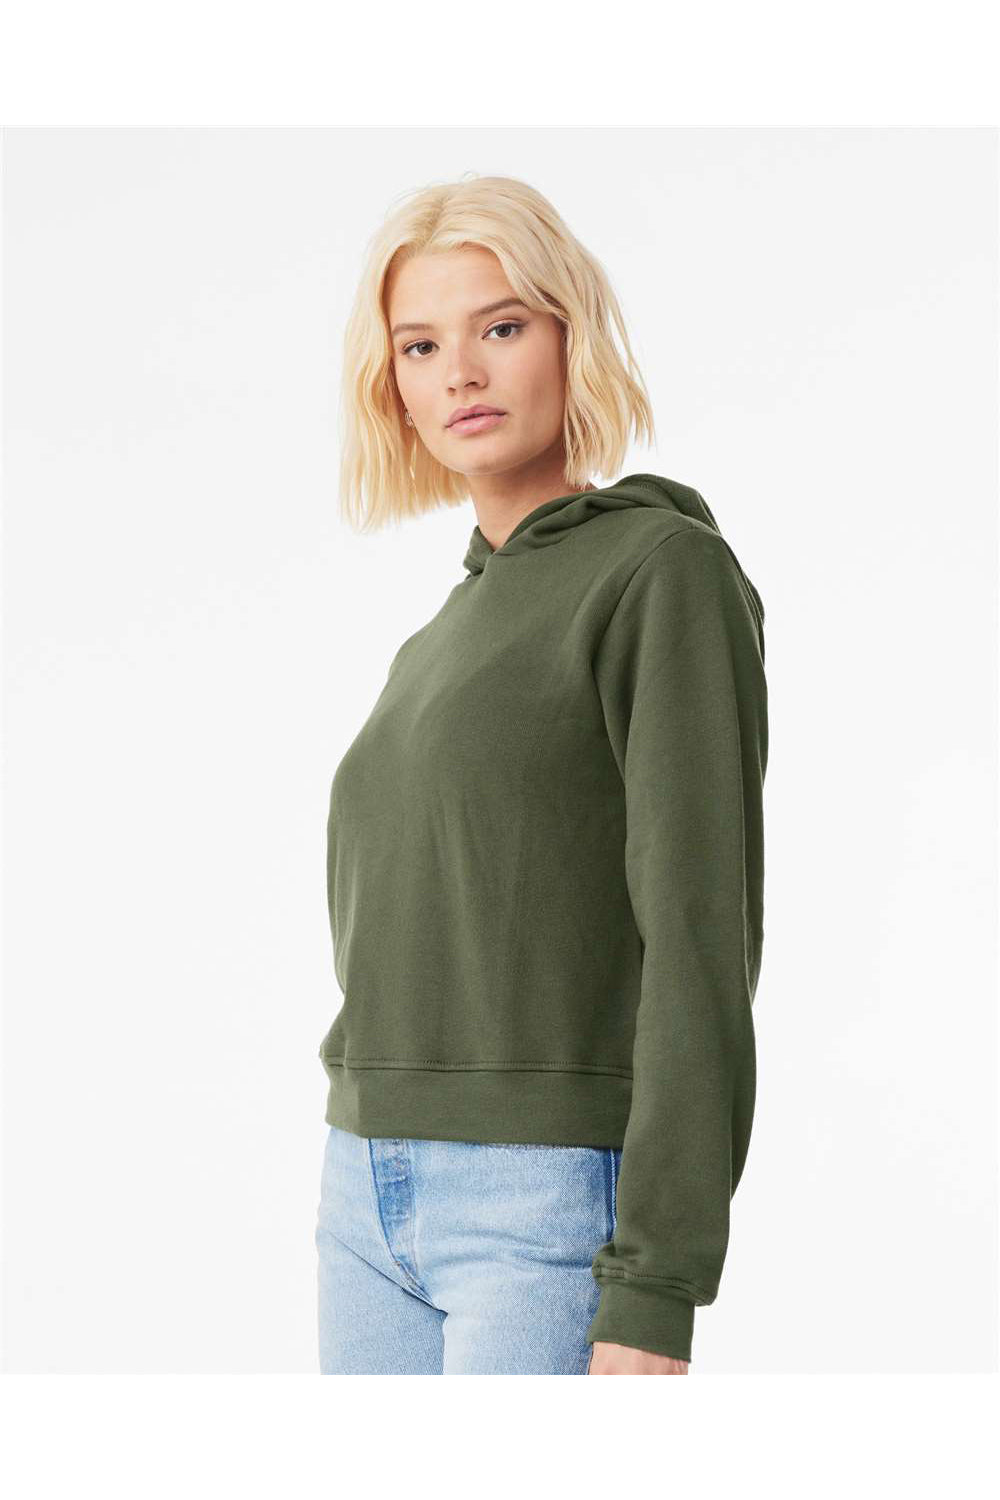 Bella + Canvas 7519 Womens Classic Hooded Sweatshirt Hoodie Military Green Model Side